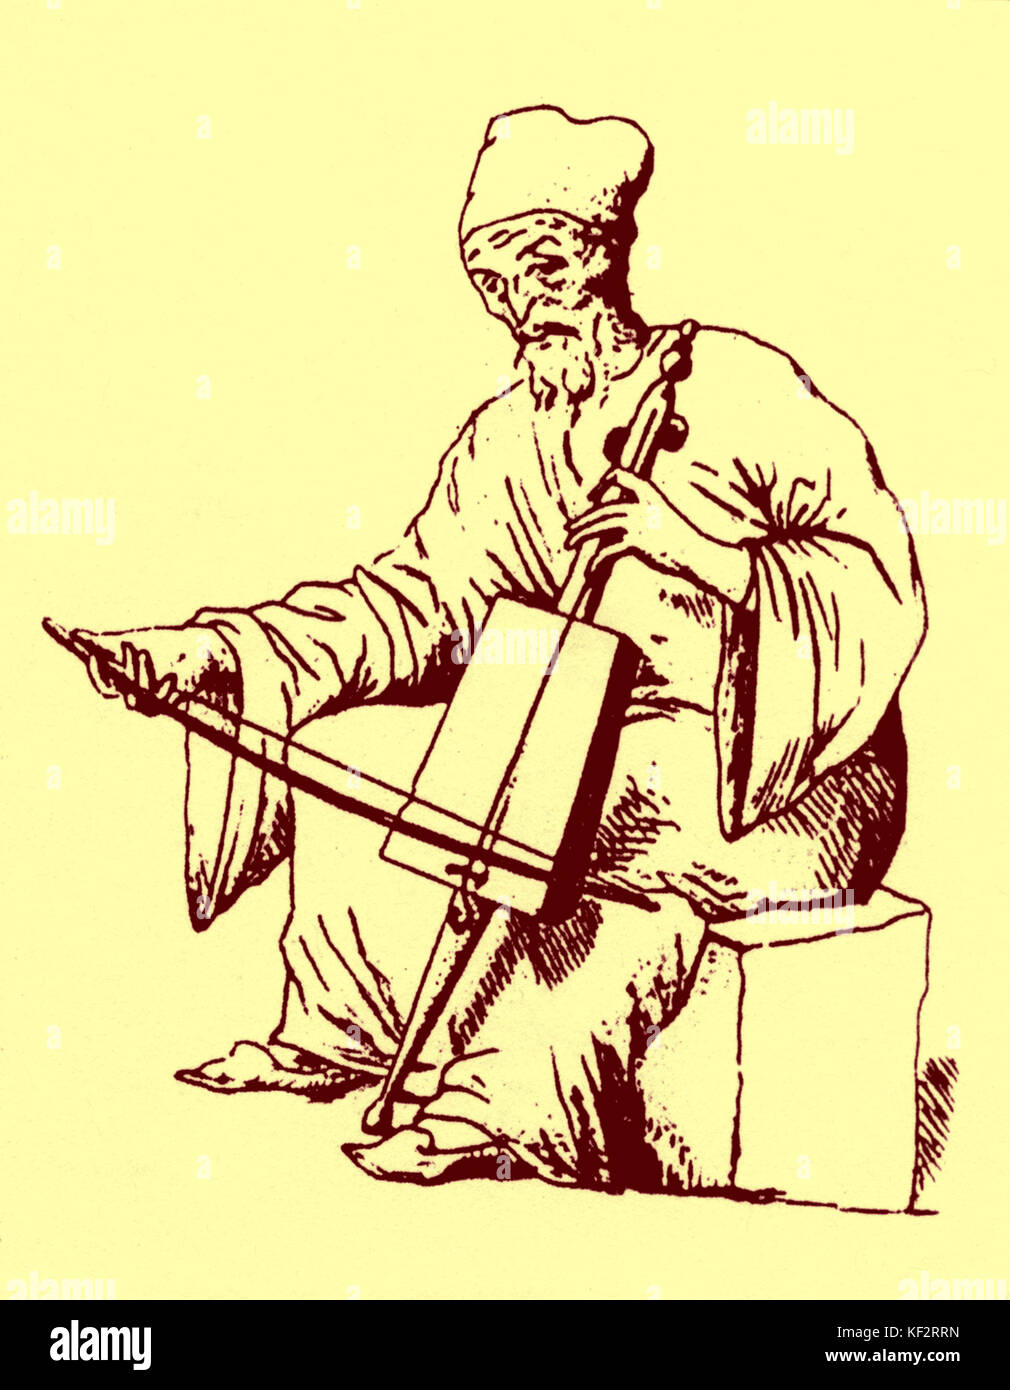 REBAB (Saudita/Persia/Egipto) árabe rebab hombre tocando el instrumento arqueadas antiguas. Foto de stock